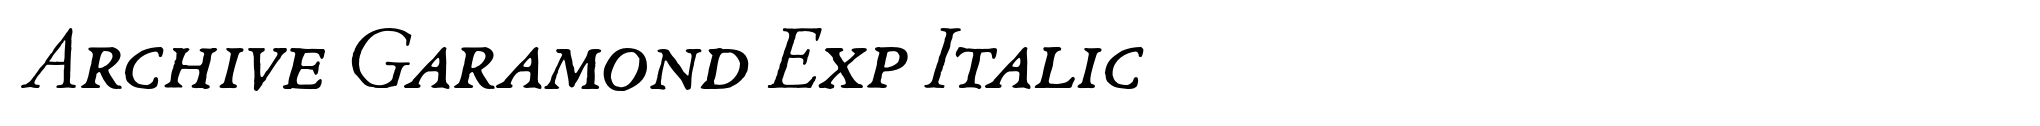 Archive Garamond Exp Italic image